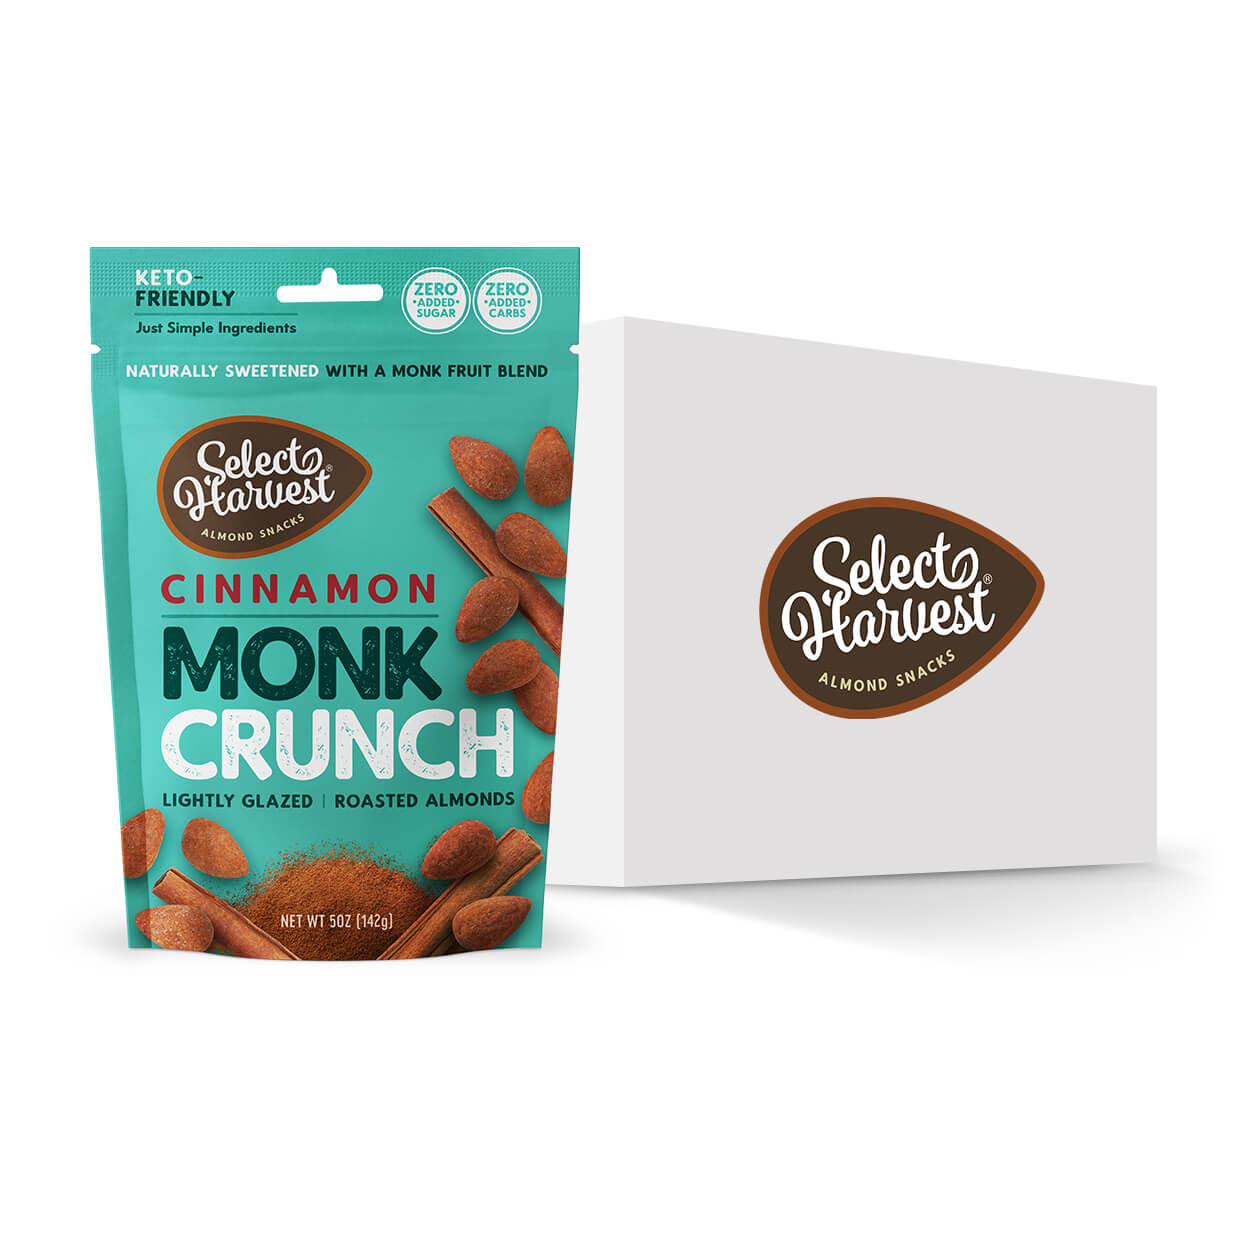 Cinnamon Monk Crunch Almonds - Case